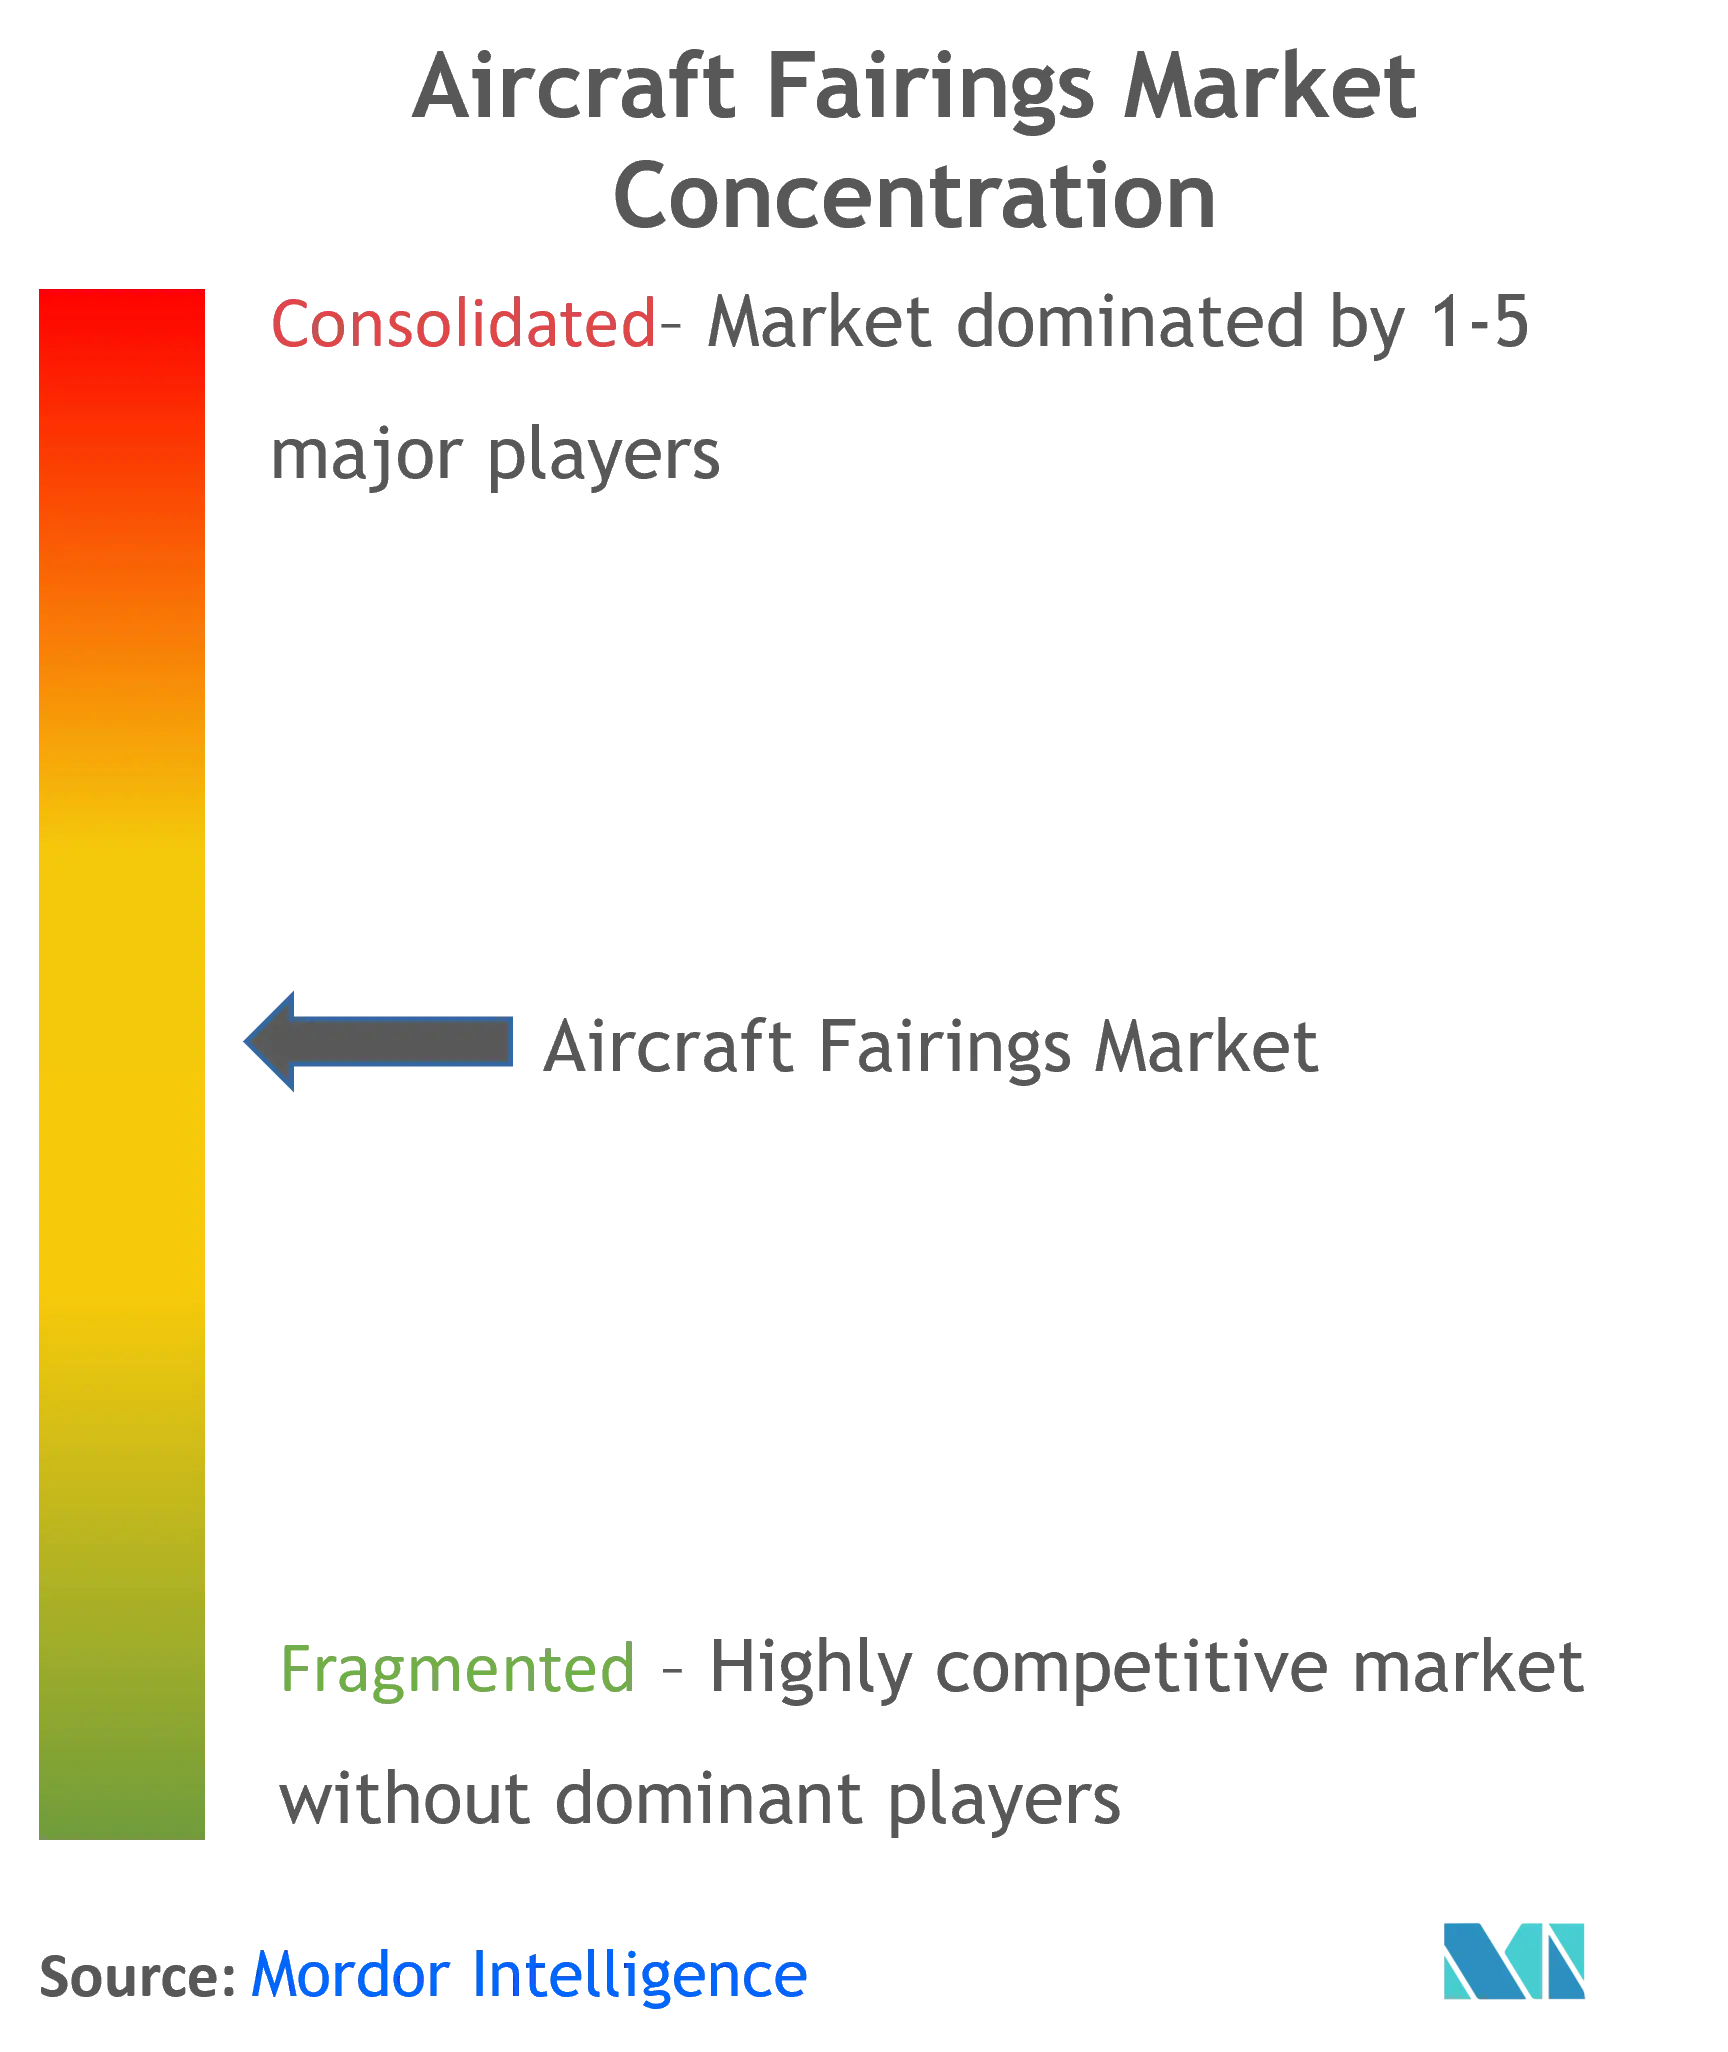 Aircraft Fairings Market Concentration